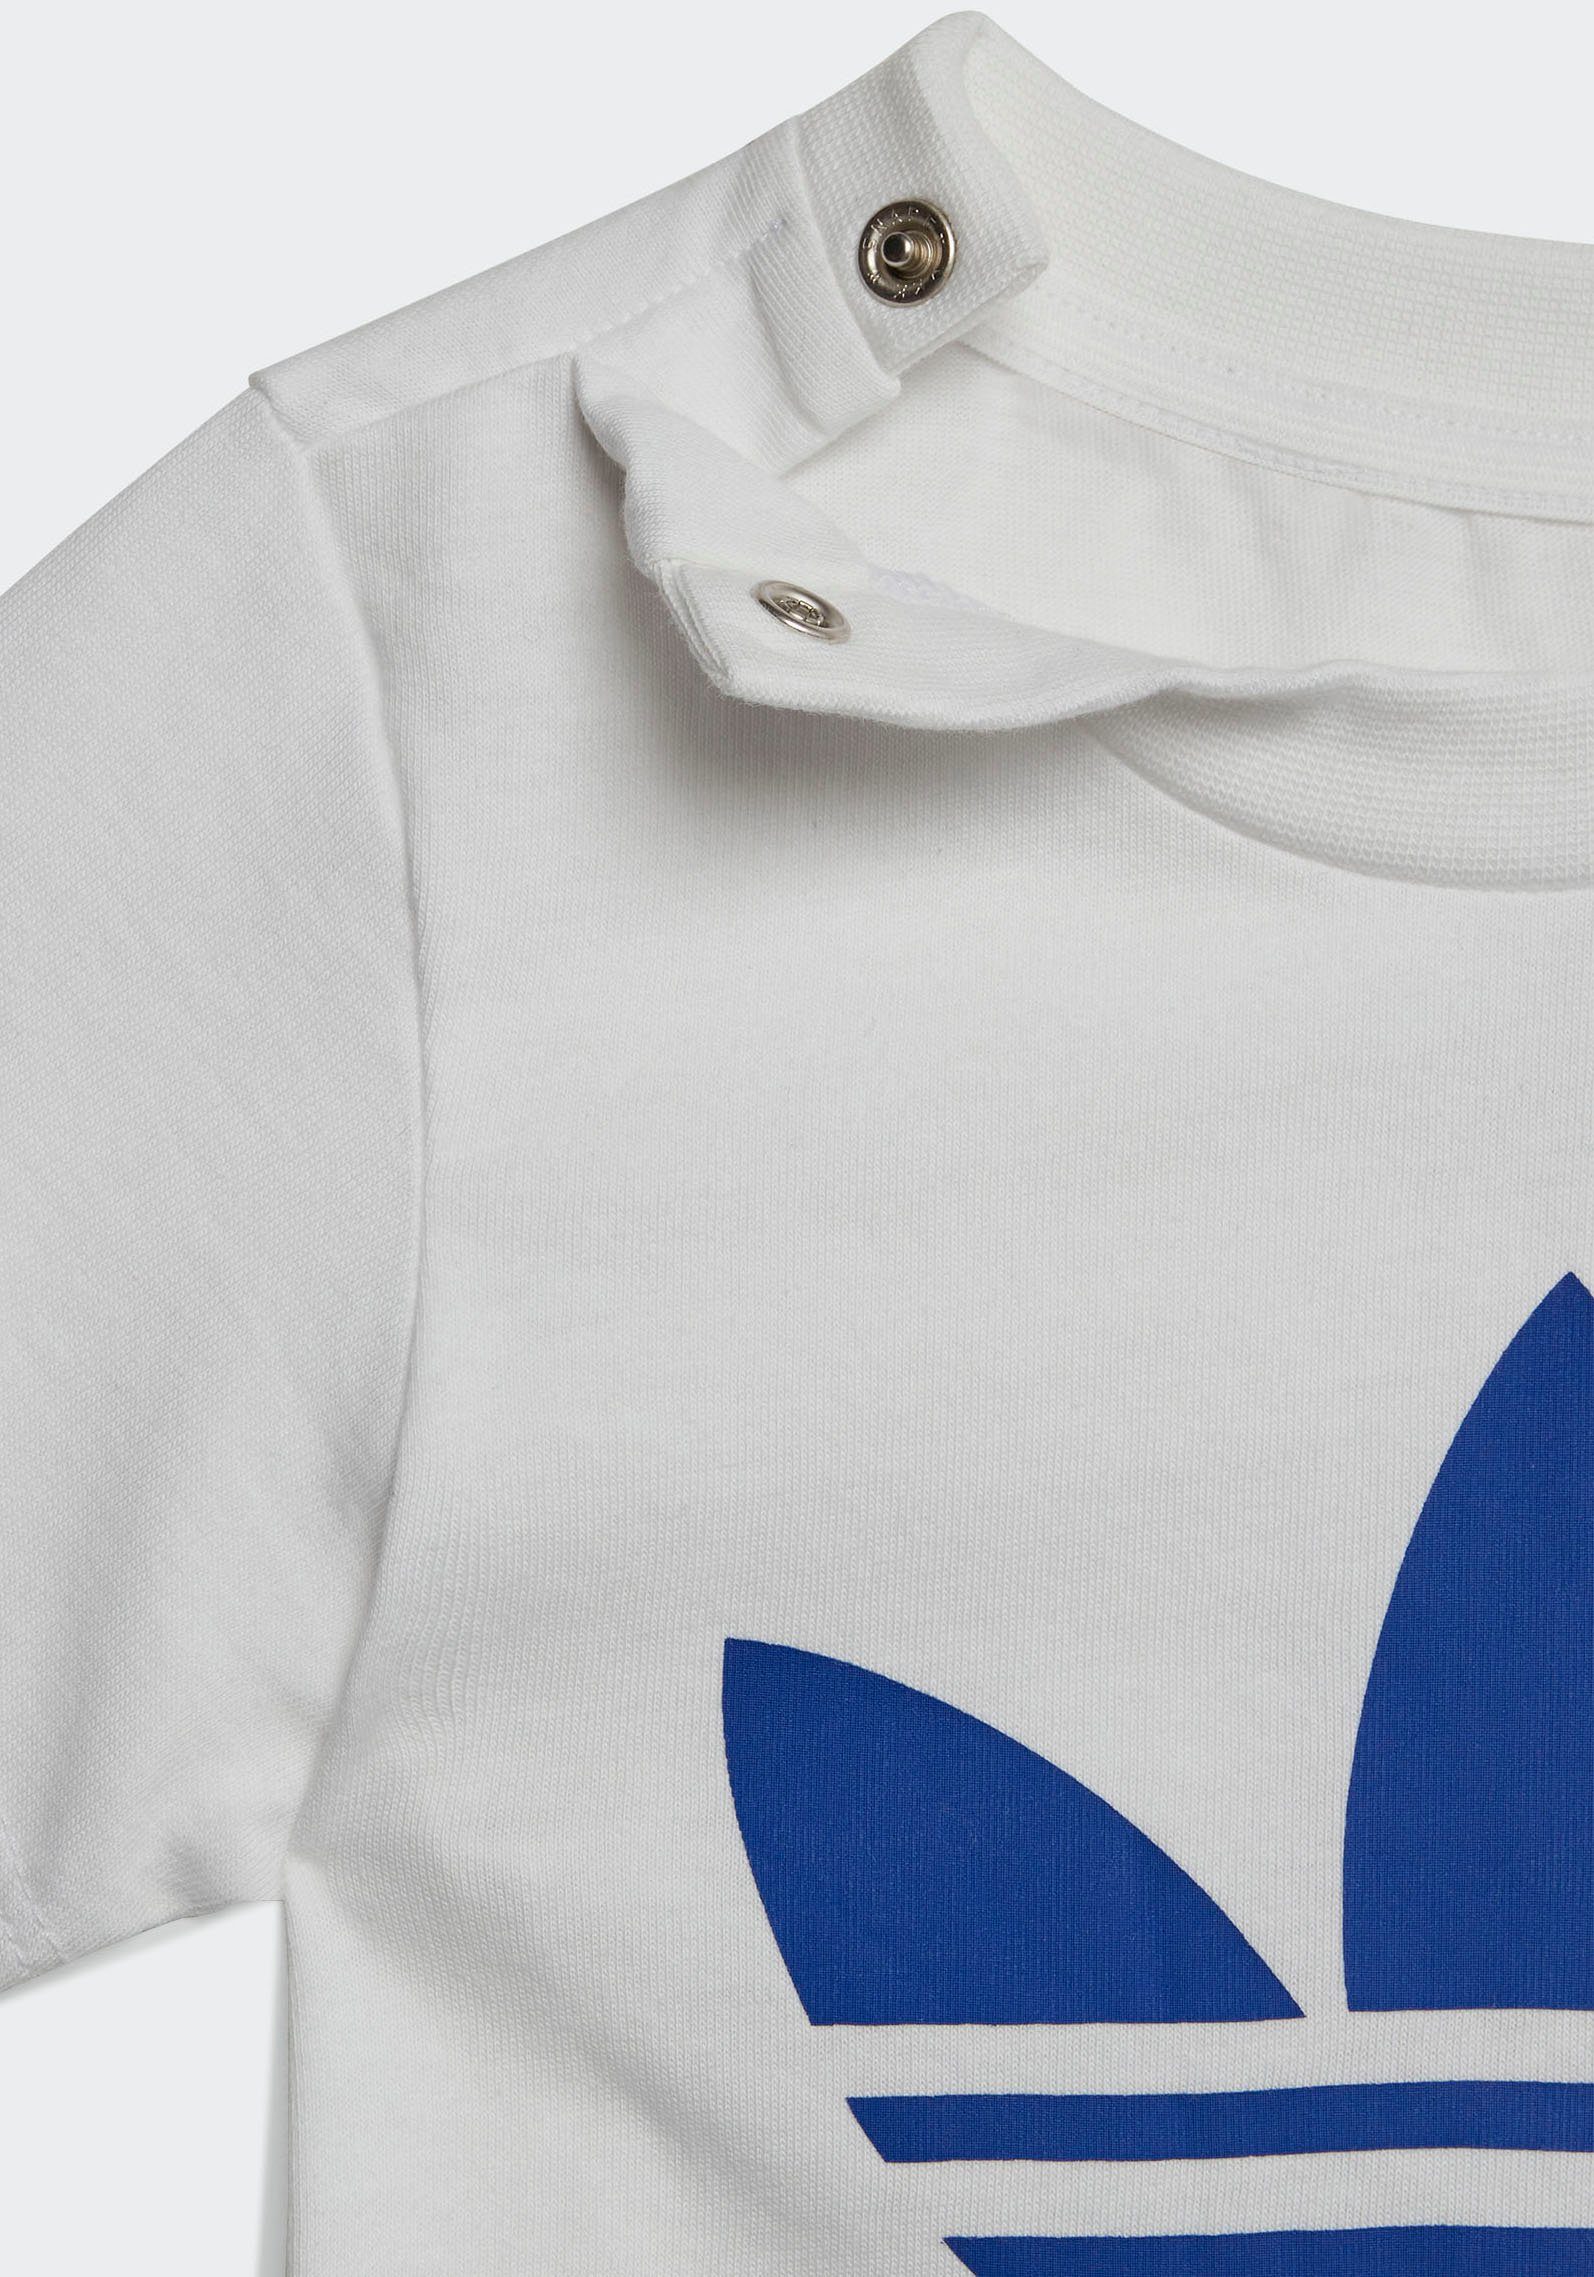 Originals TREFOIL & Shorts SHORTS Lucid adidas UND (Set) T-Shirt Semi SET Blue